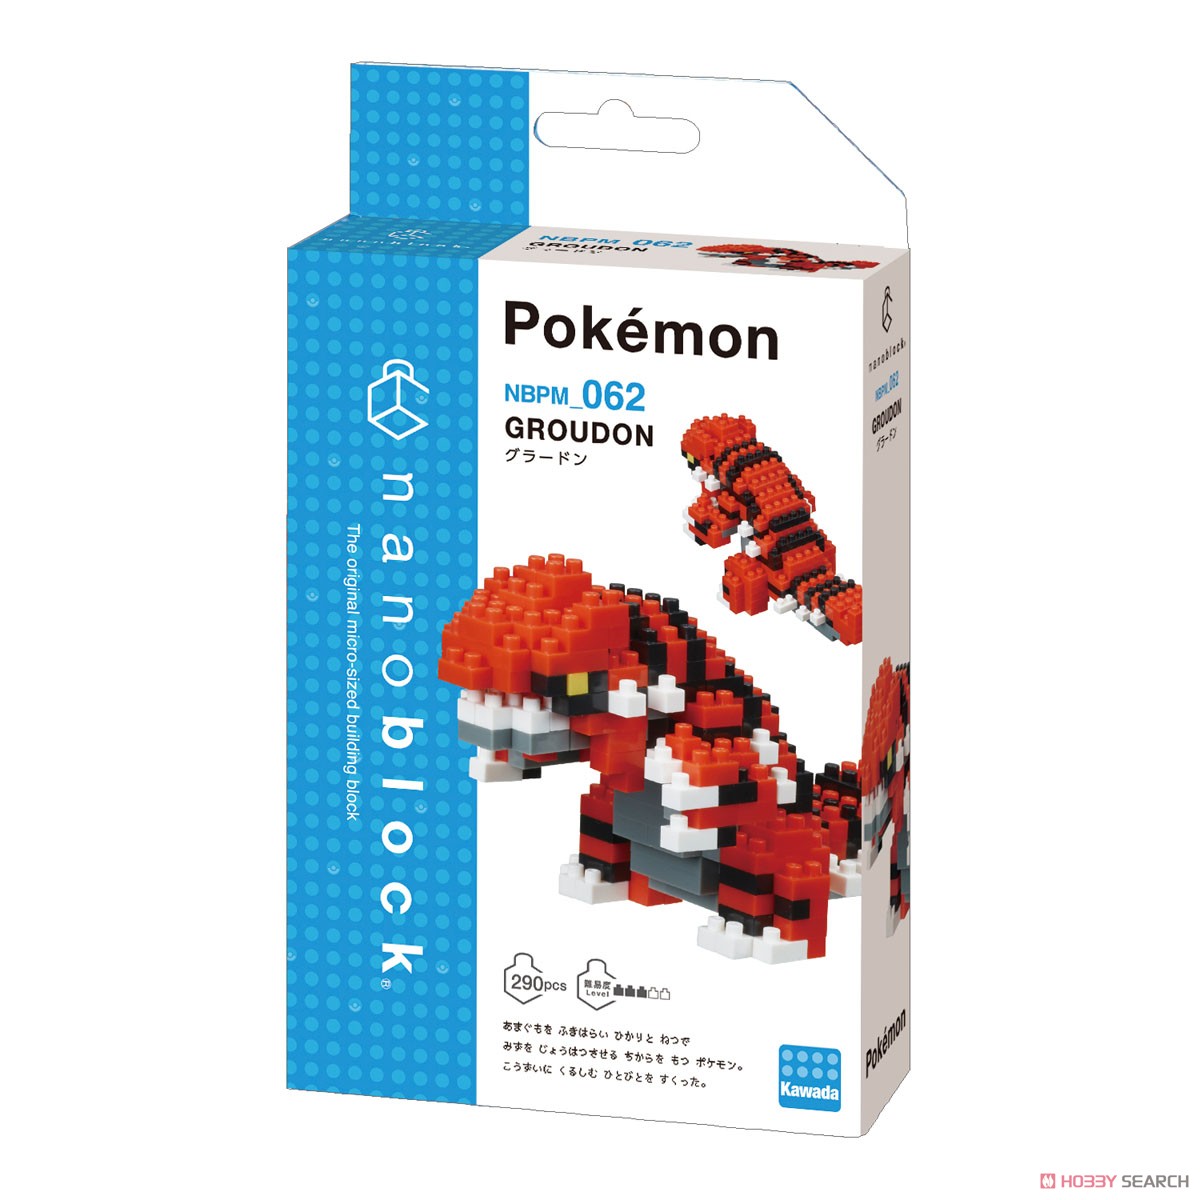 nanoblock Pokemon Groudon (Block Toy) Package1